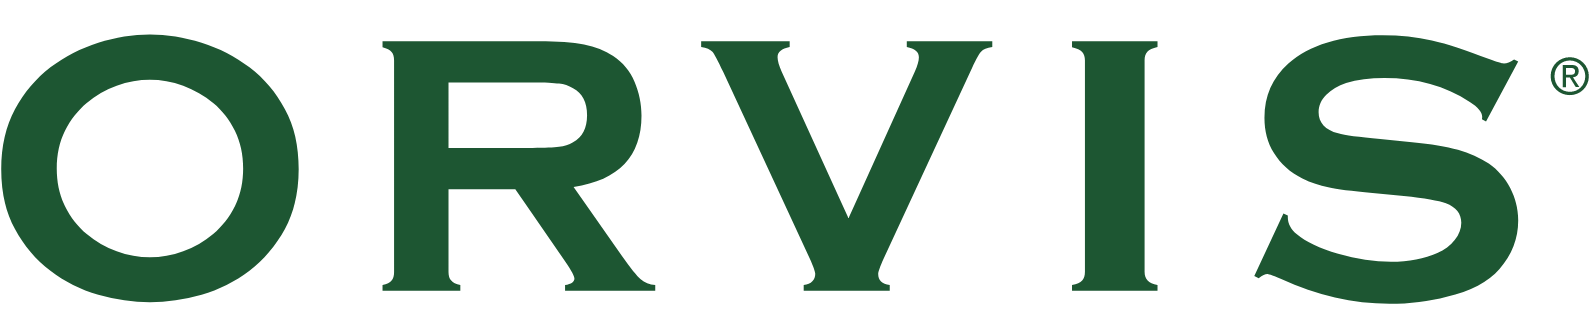 Orvis Logo - File:Orivs Logo.png - Wikimedia Commons